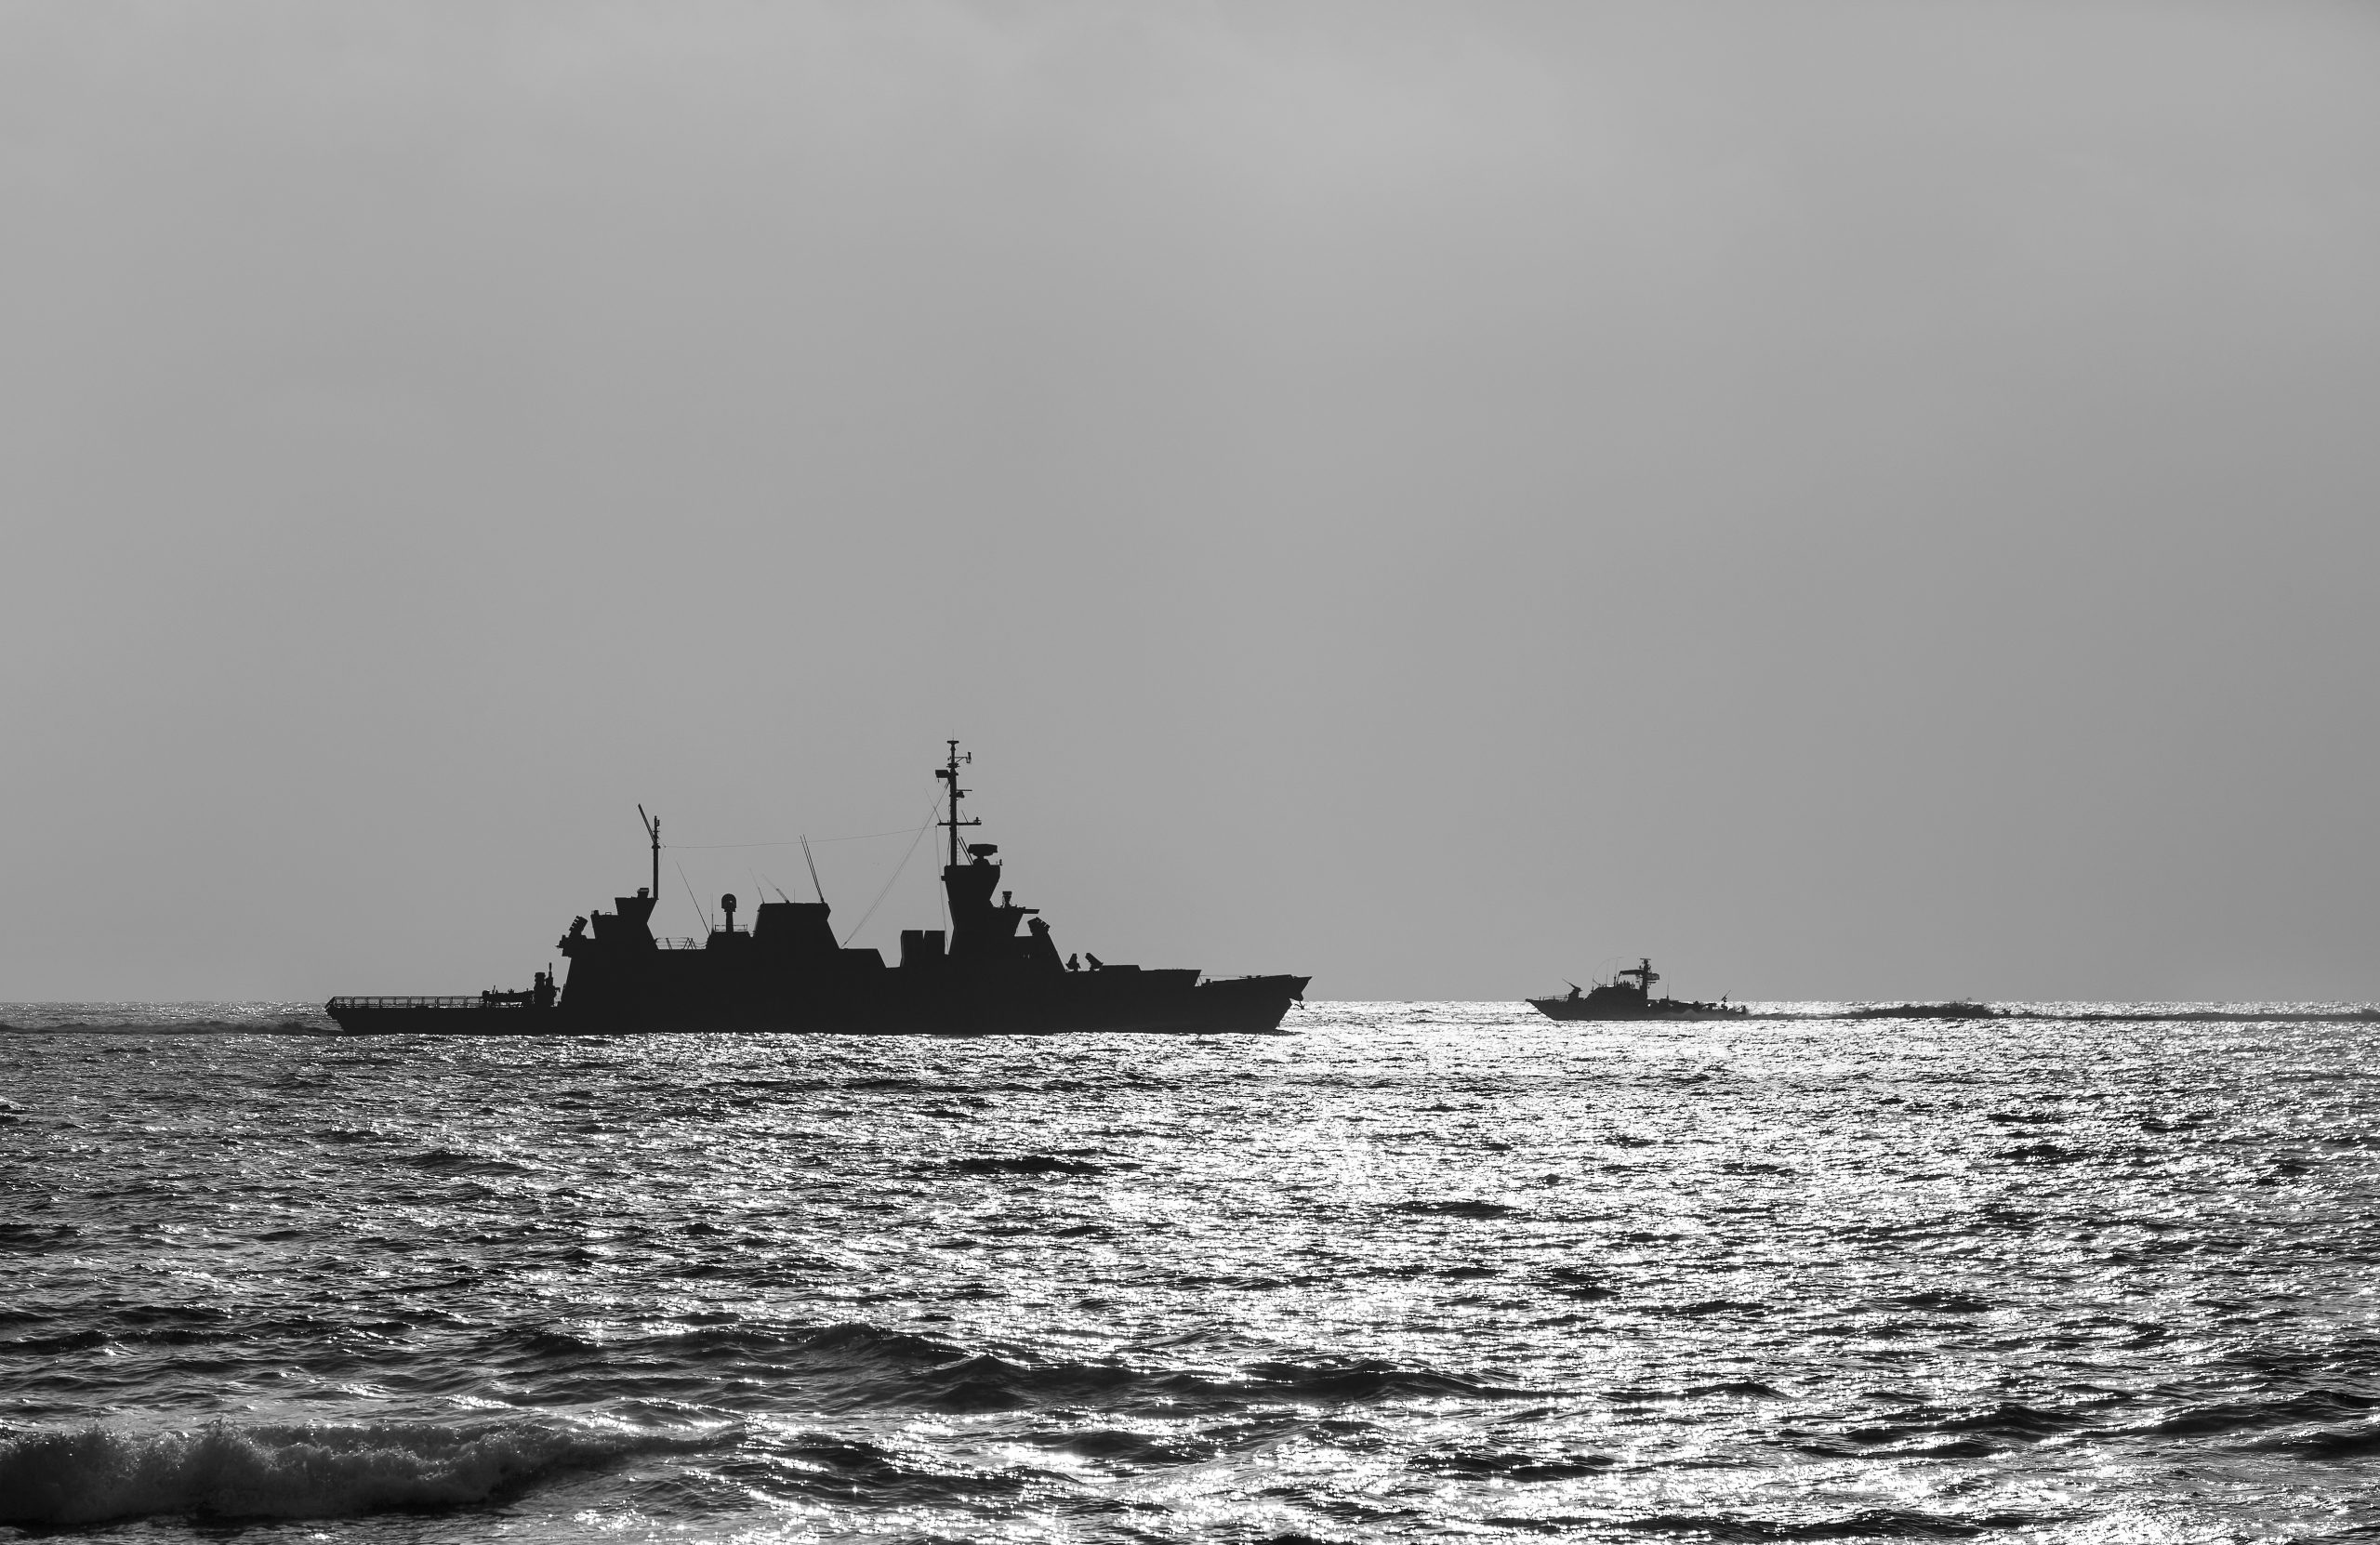 Military navy ships